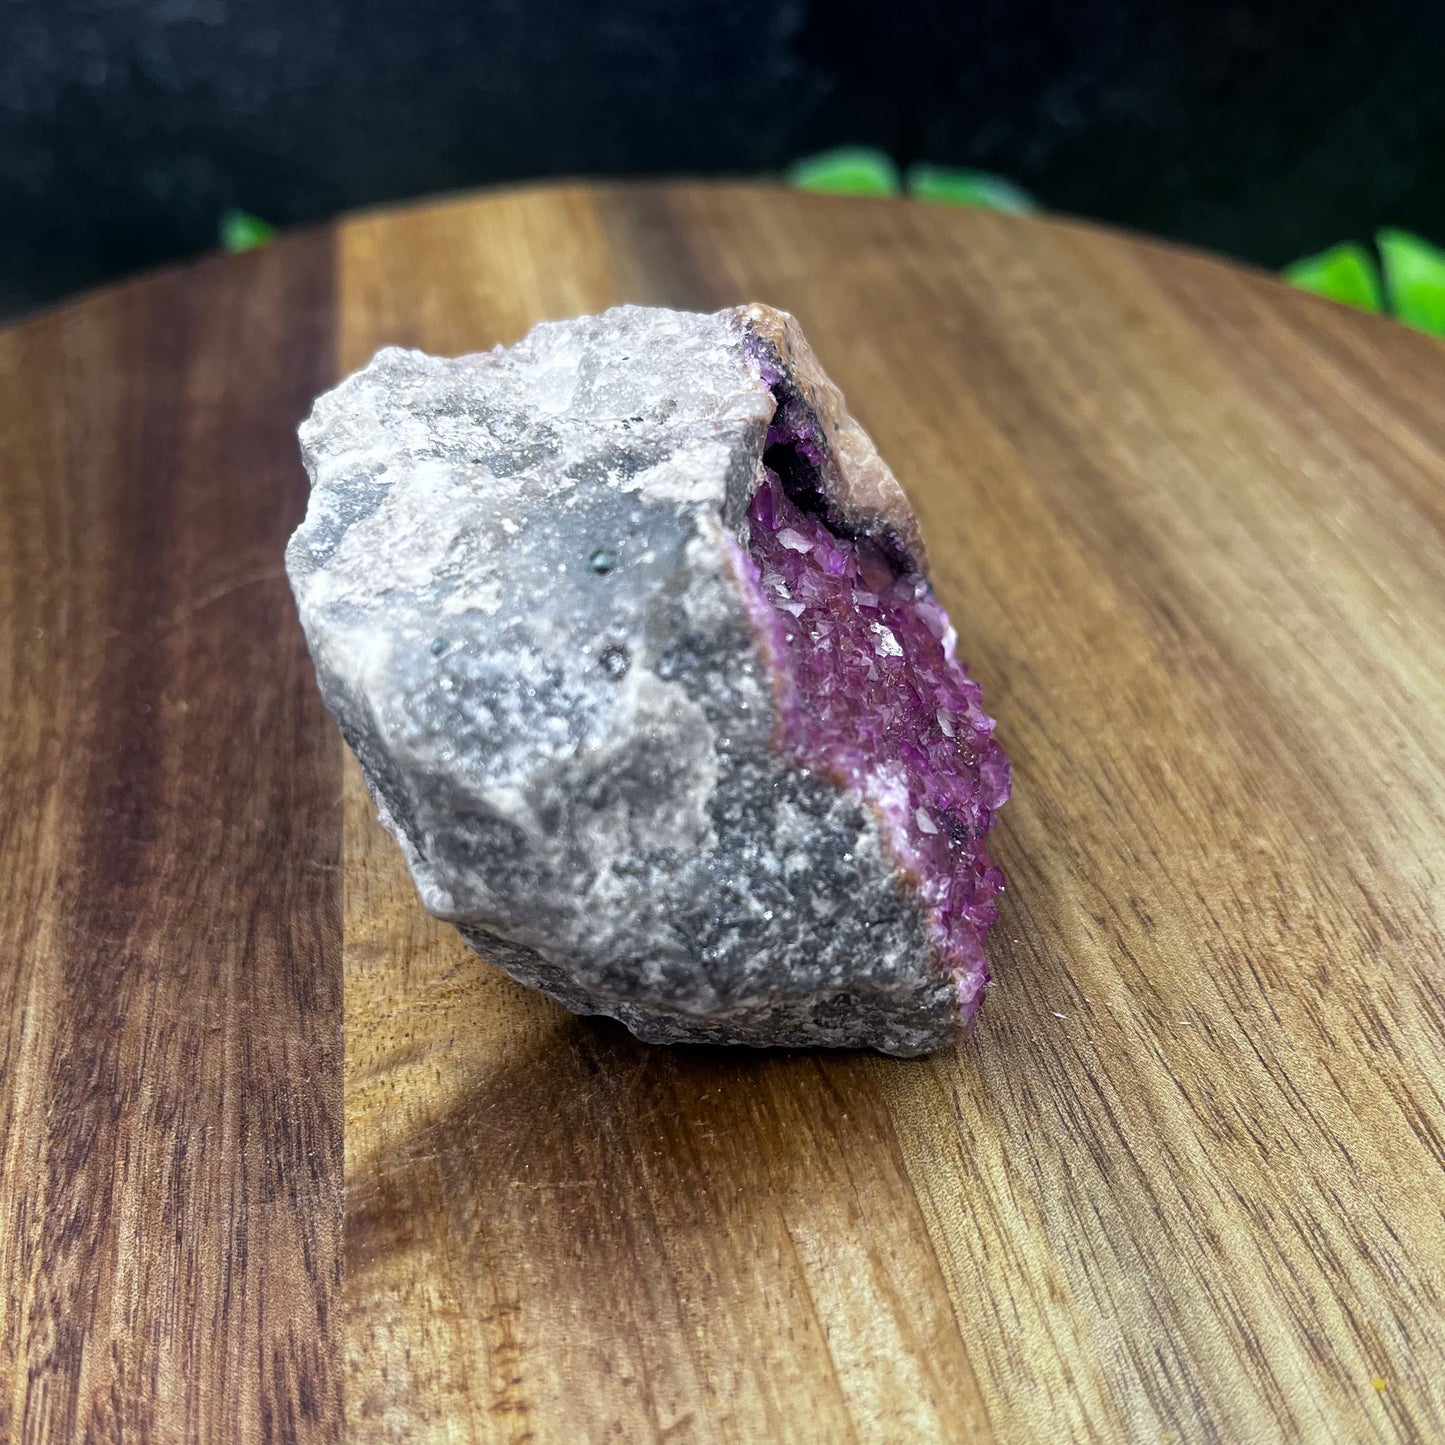 Pink Cobalt Calcite